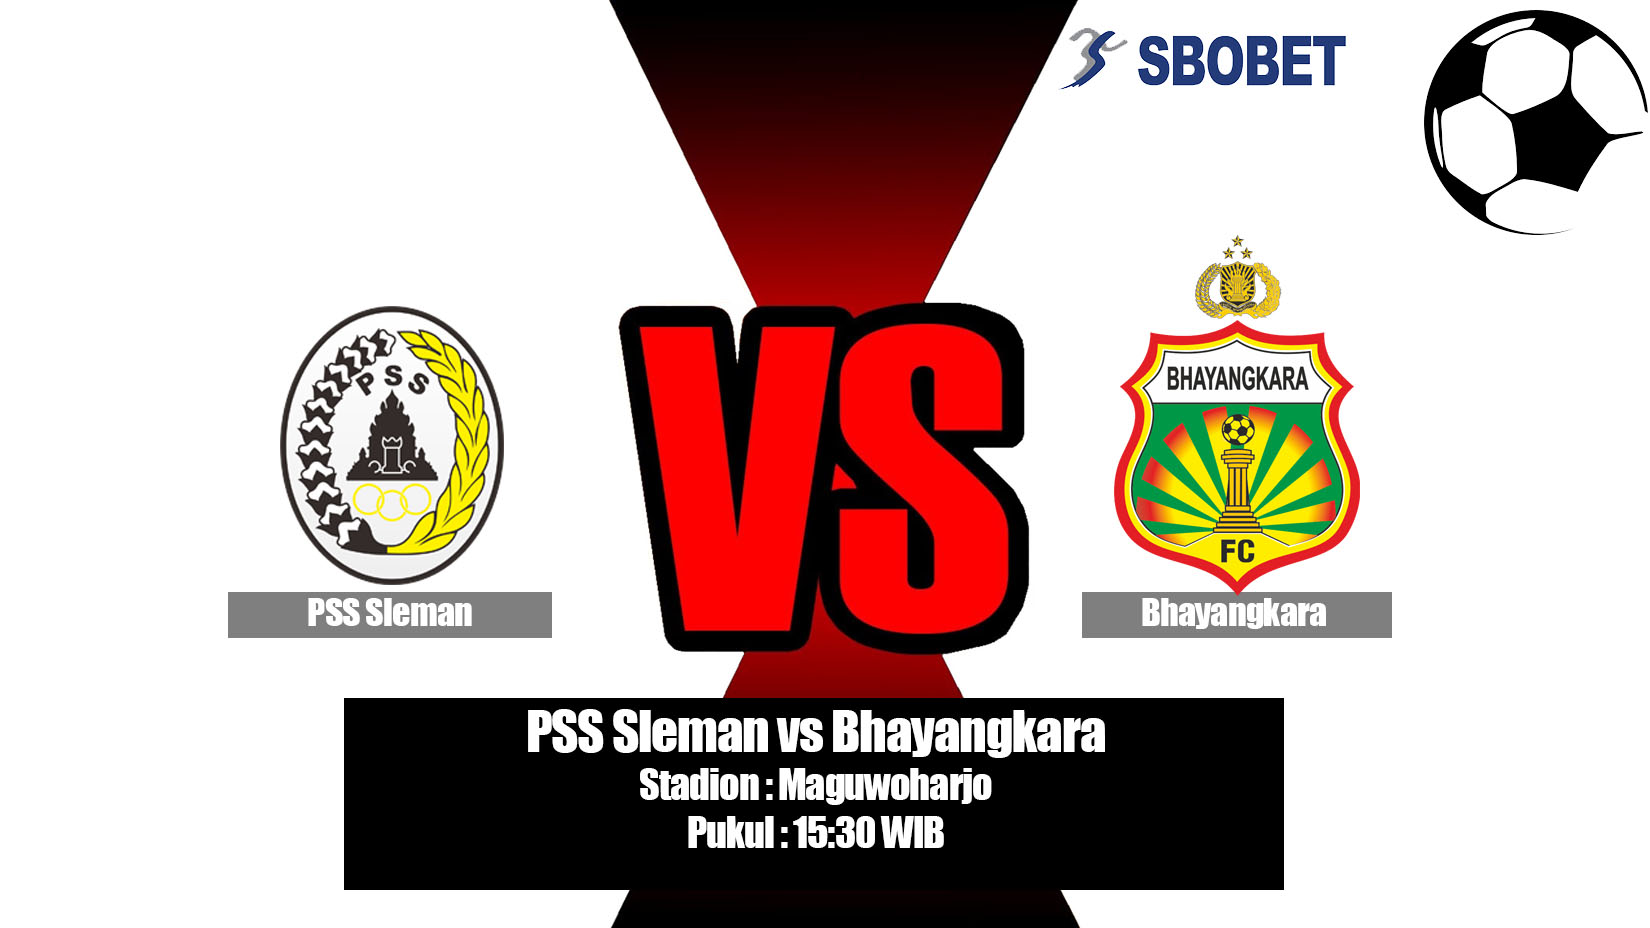 Prediksi Bola PSS Sleman vs Bhayangkara 22 Juni 2019